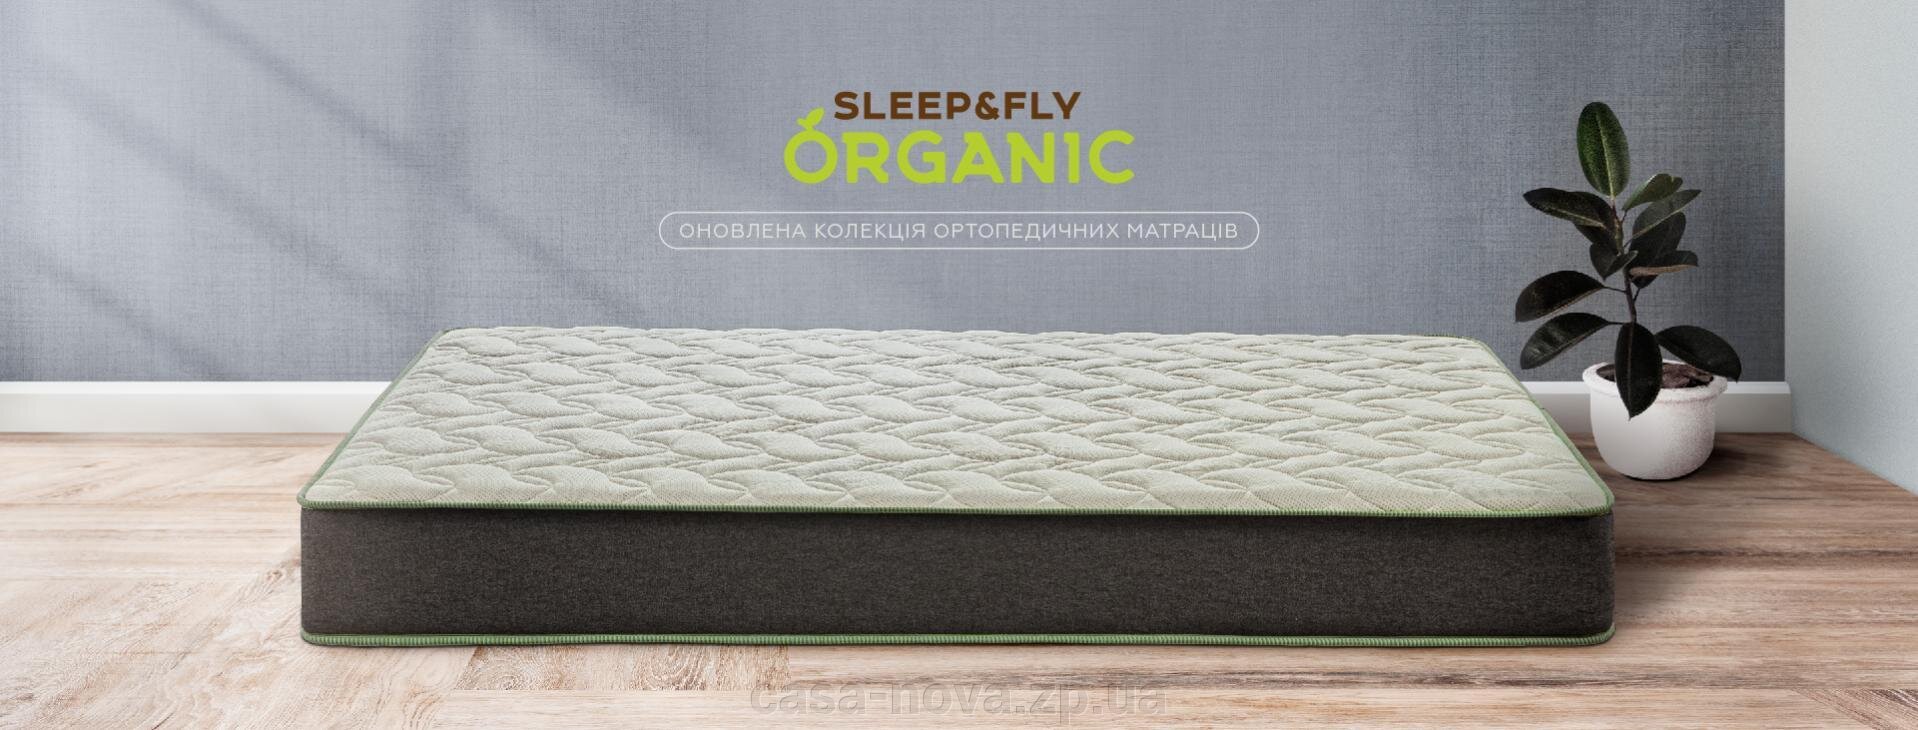 Sleep&Fly organic матрасы